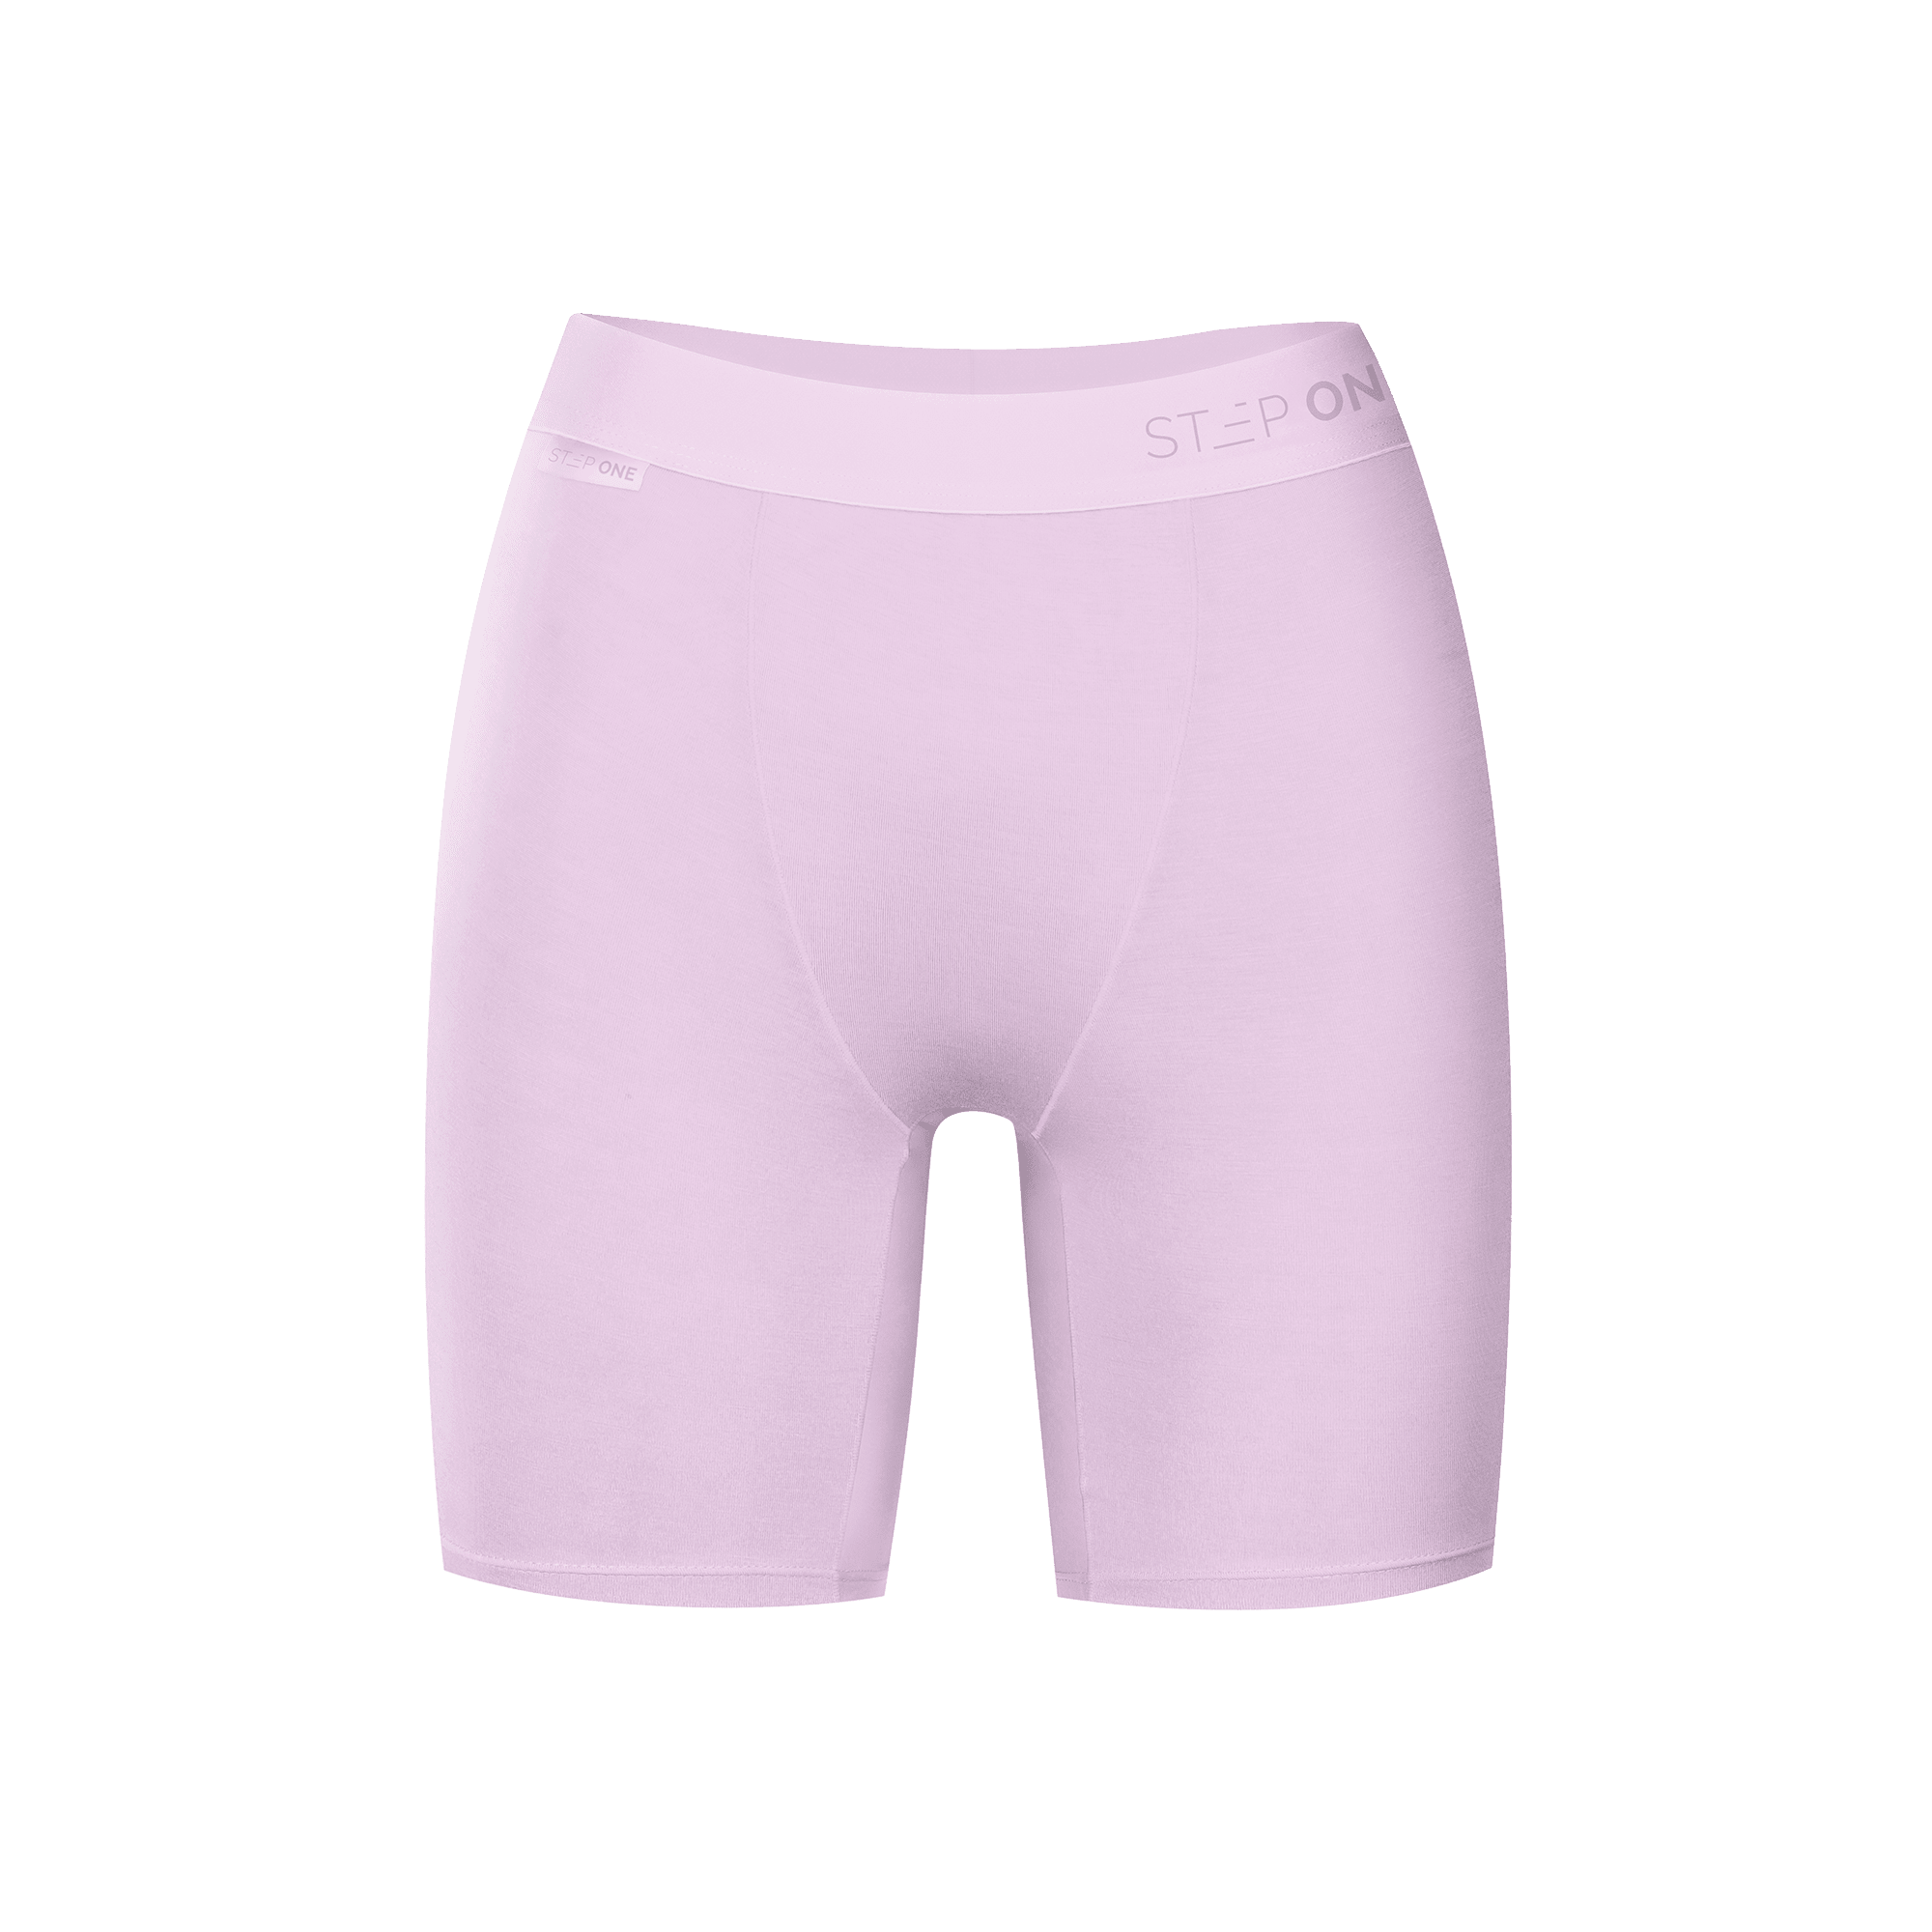 Women's White Boxer Shorts